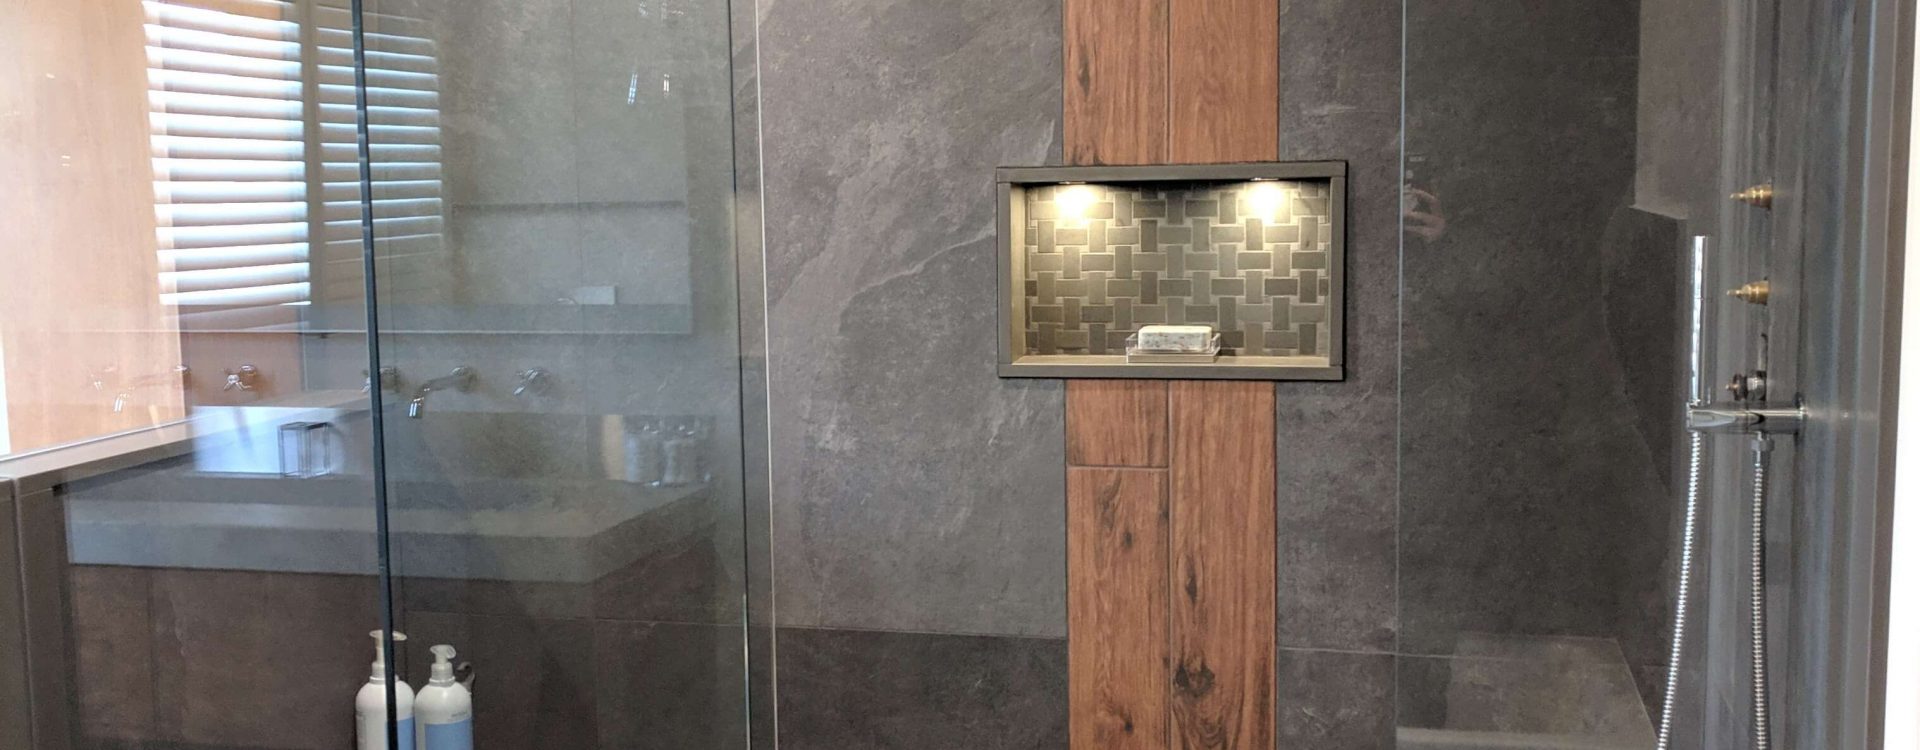 durham bathroom renovation and shower installation